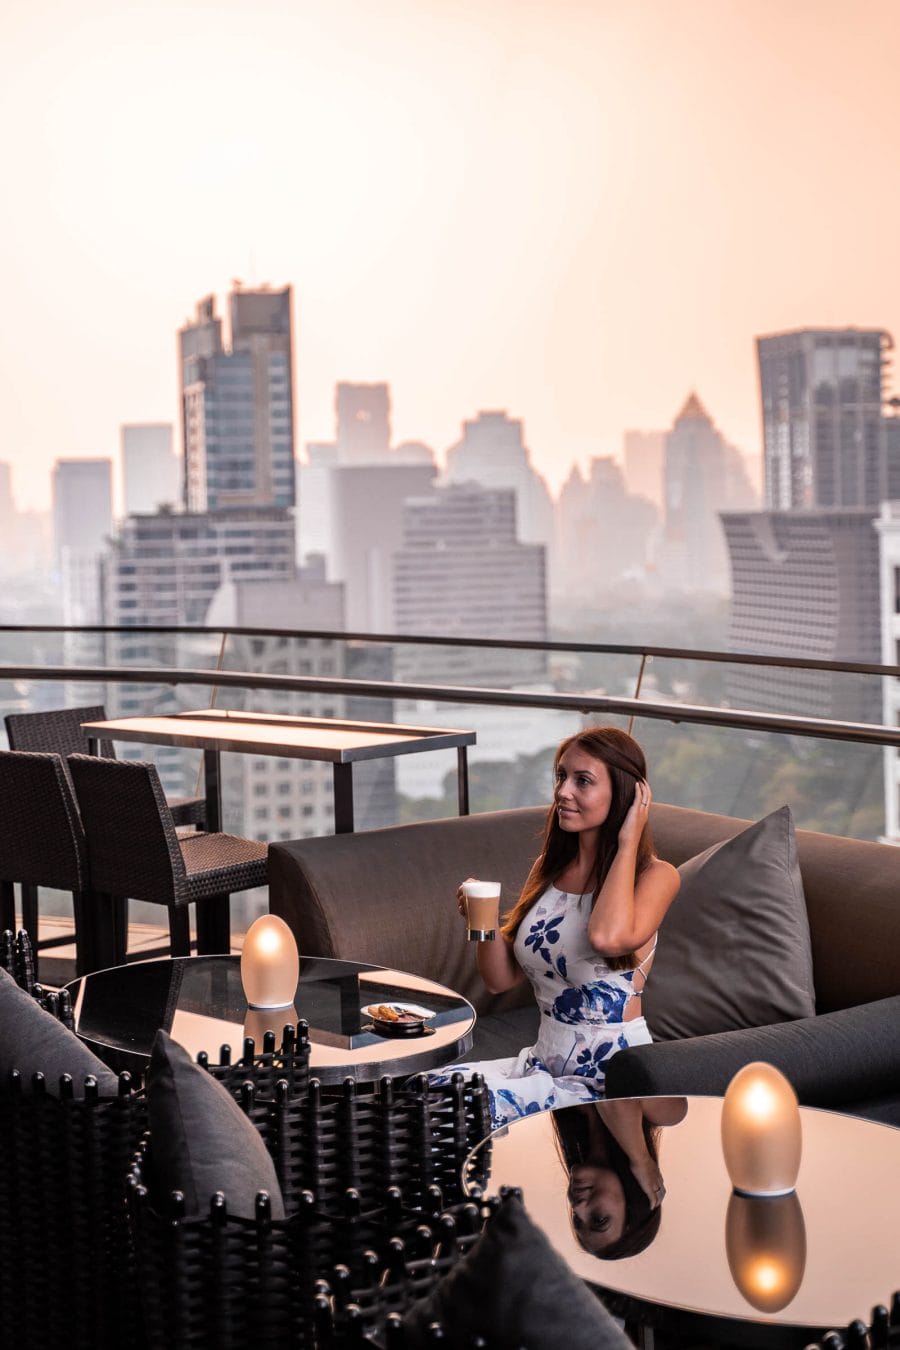 View from the terrace of The Okura Prestige Bangkok